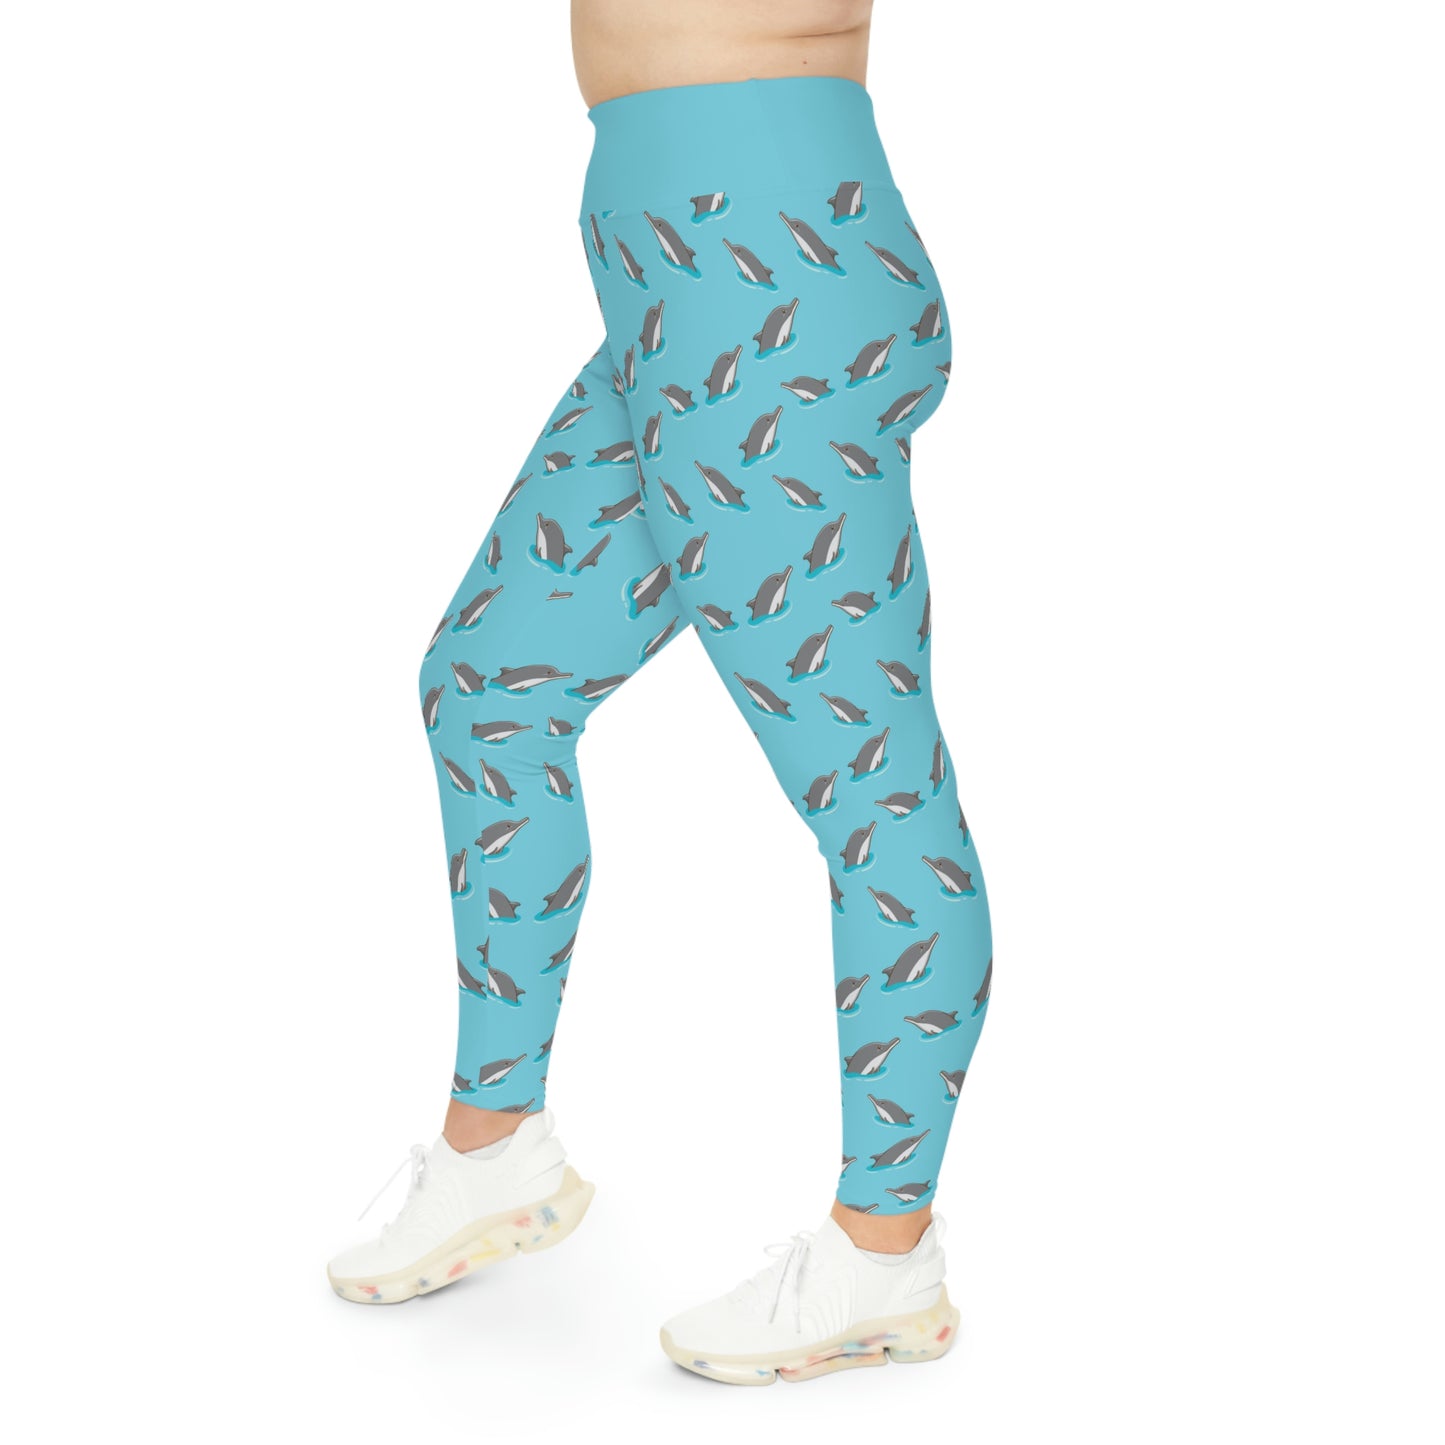 Dolphin Print Plus Size Leggings, Spandex Leggings